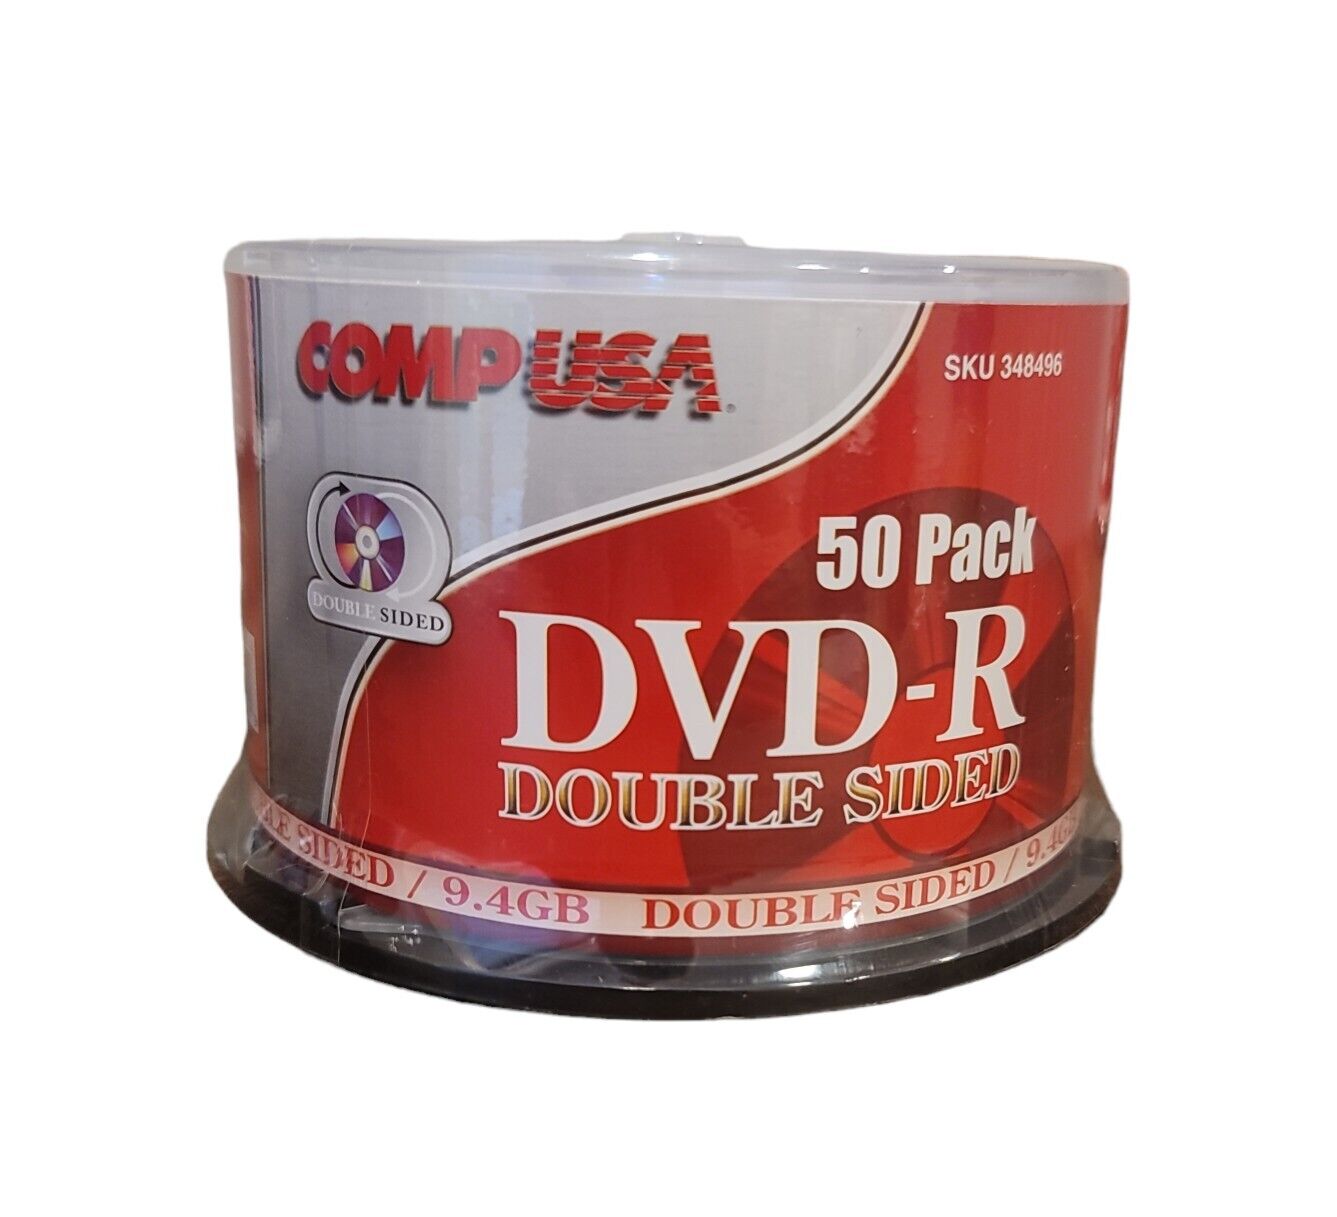 Brand New CompUSA  Double Sided DVD-R  50pk 9.4gb 16x  Super Rare HTF 